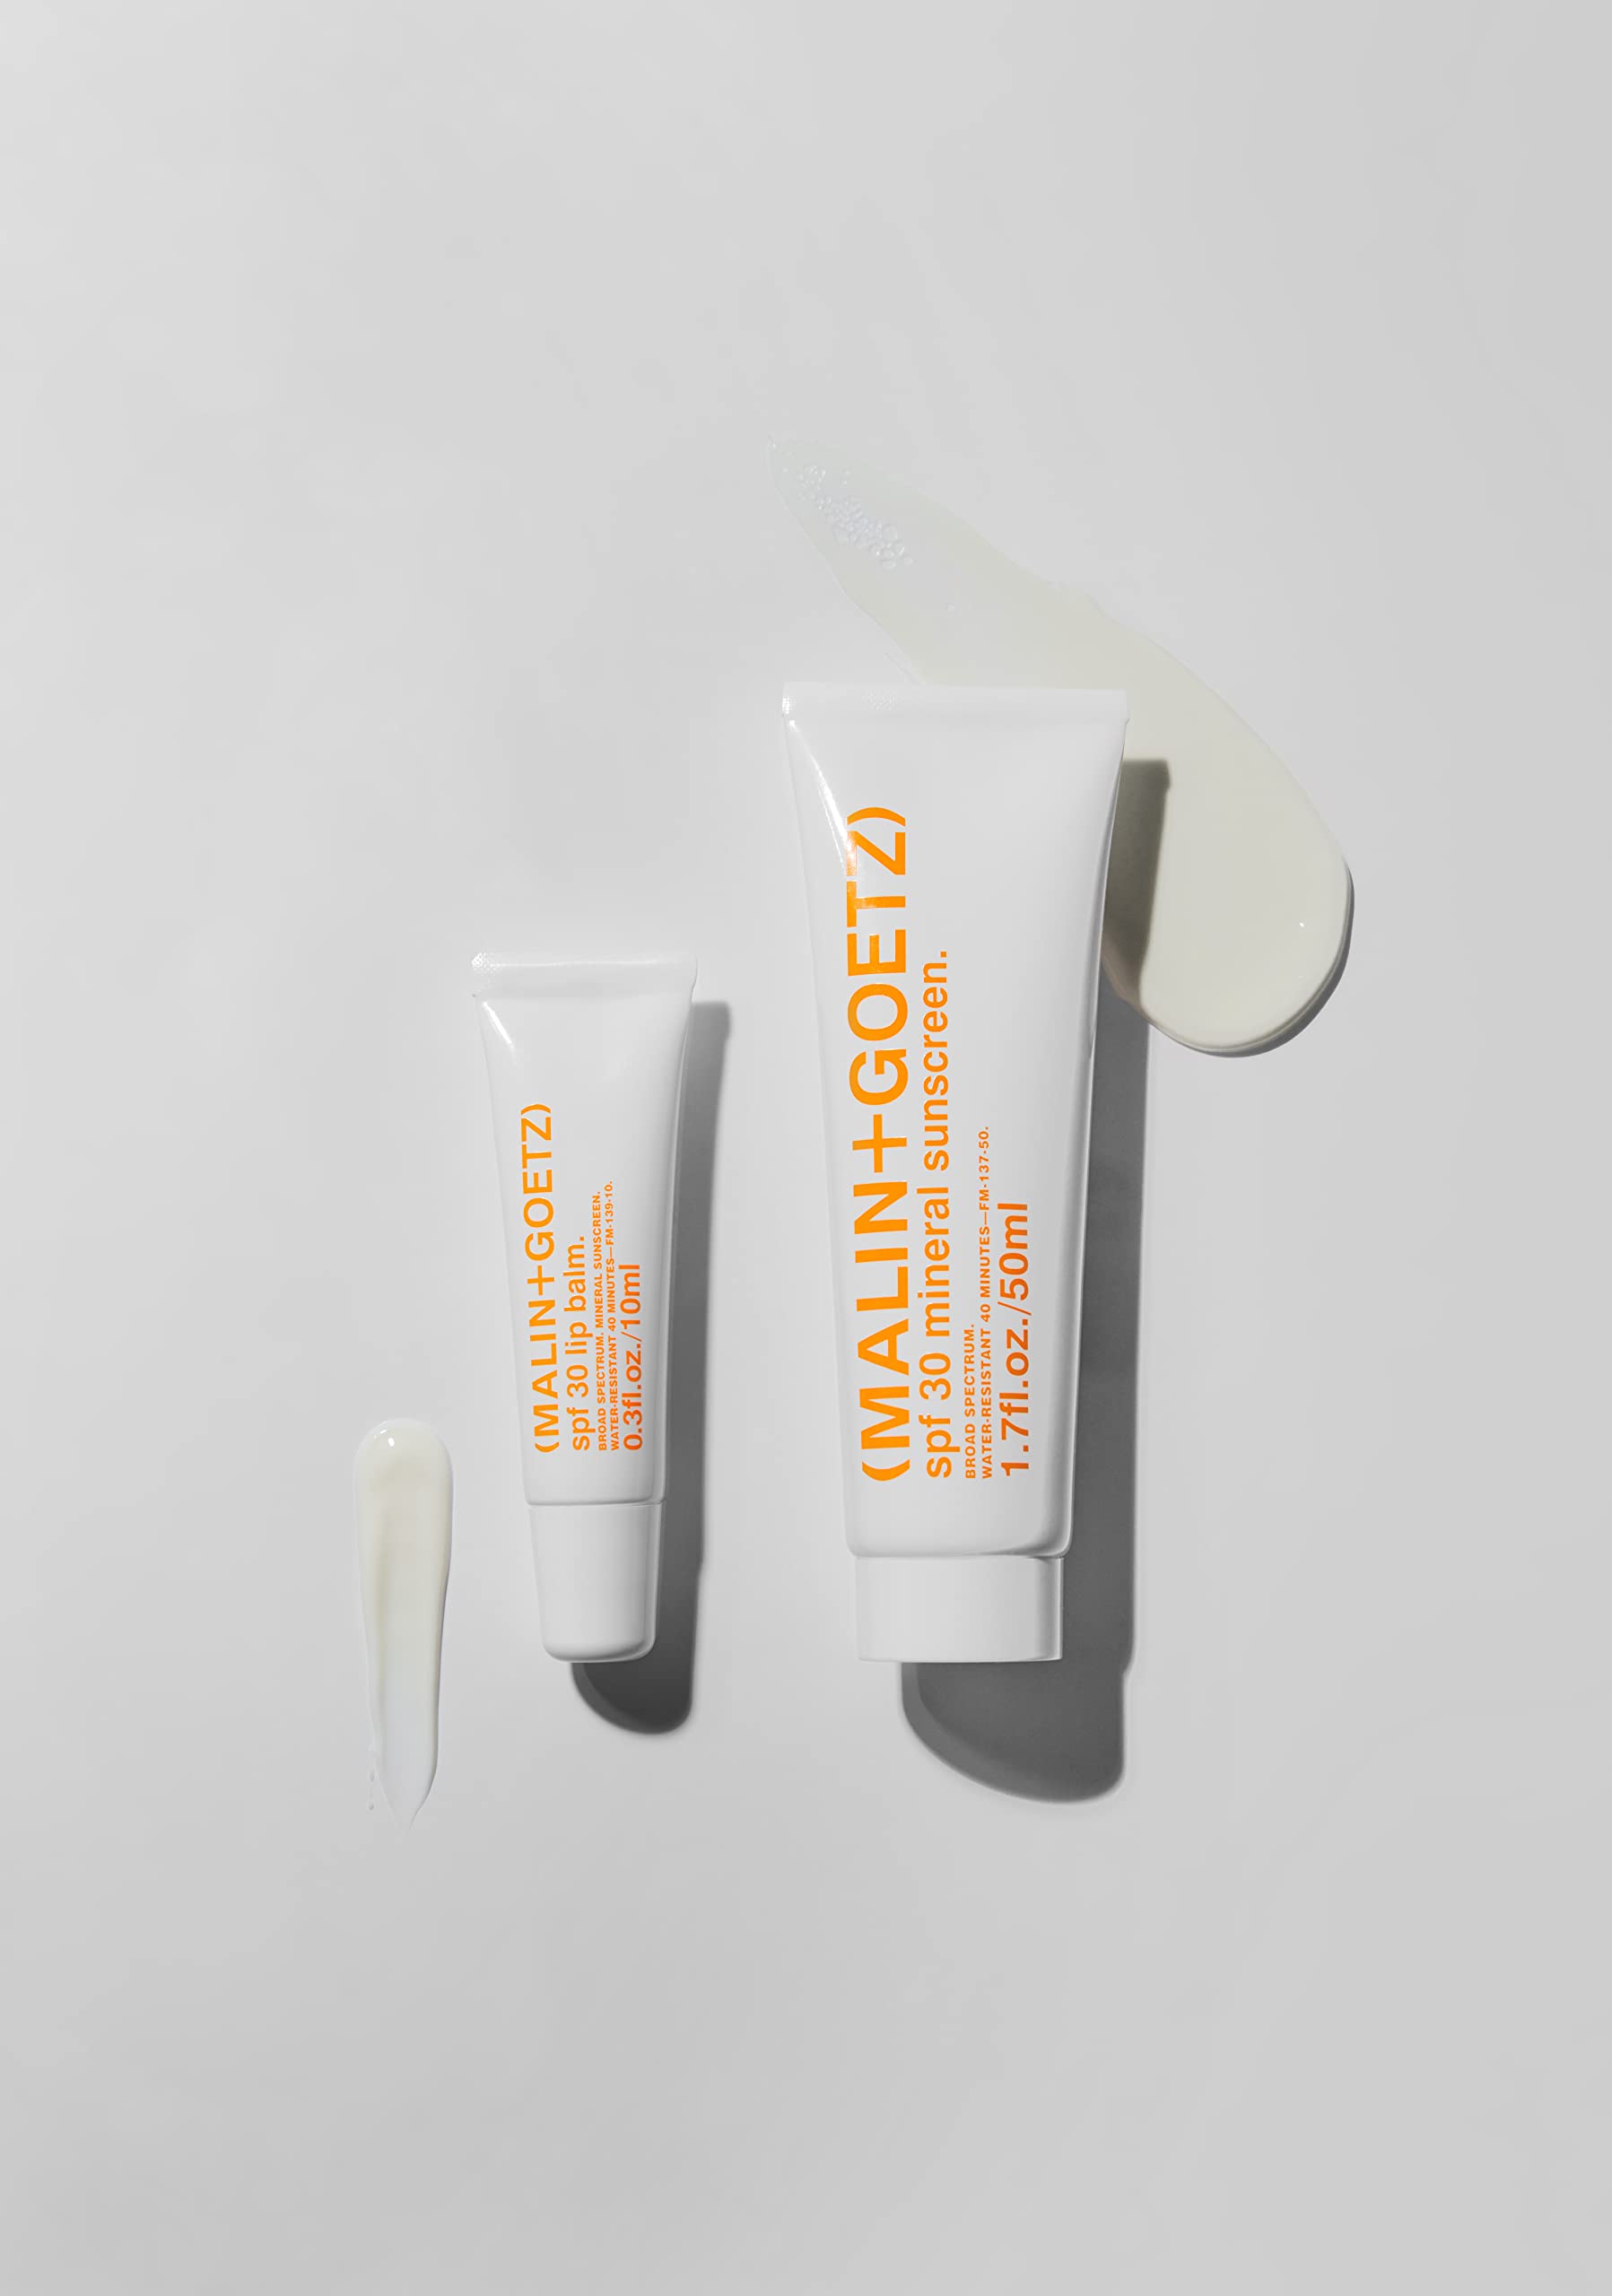 Malin + Goetz SPF 30 Lip Balm, 0.3fl oz, 10ml – Water Resistant for 40 Minutes, Lip Balm & Moisturizer, Lip Balm SPF, Lip Care Products, Sunscreen Lip Balm